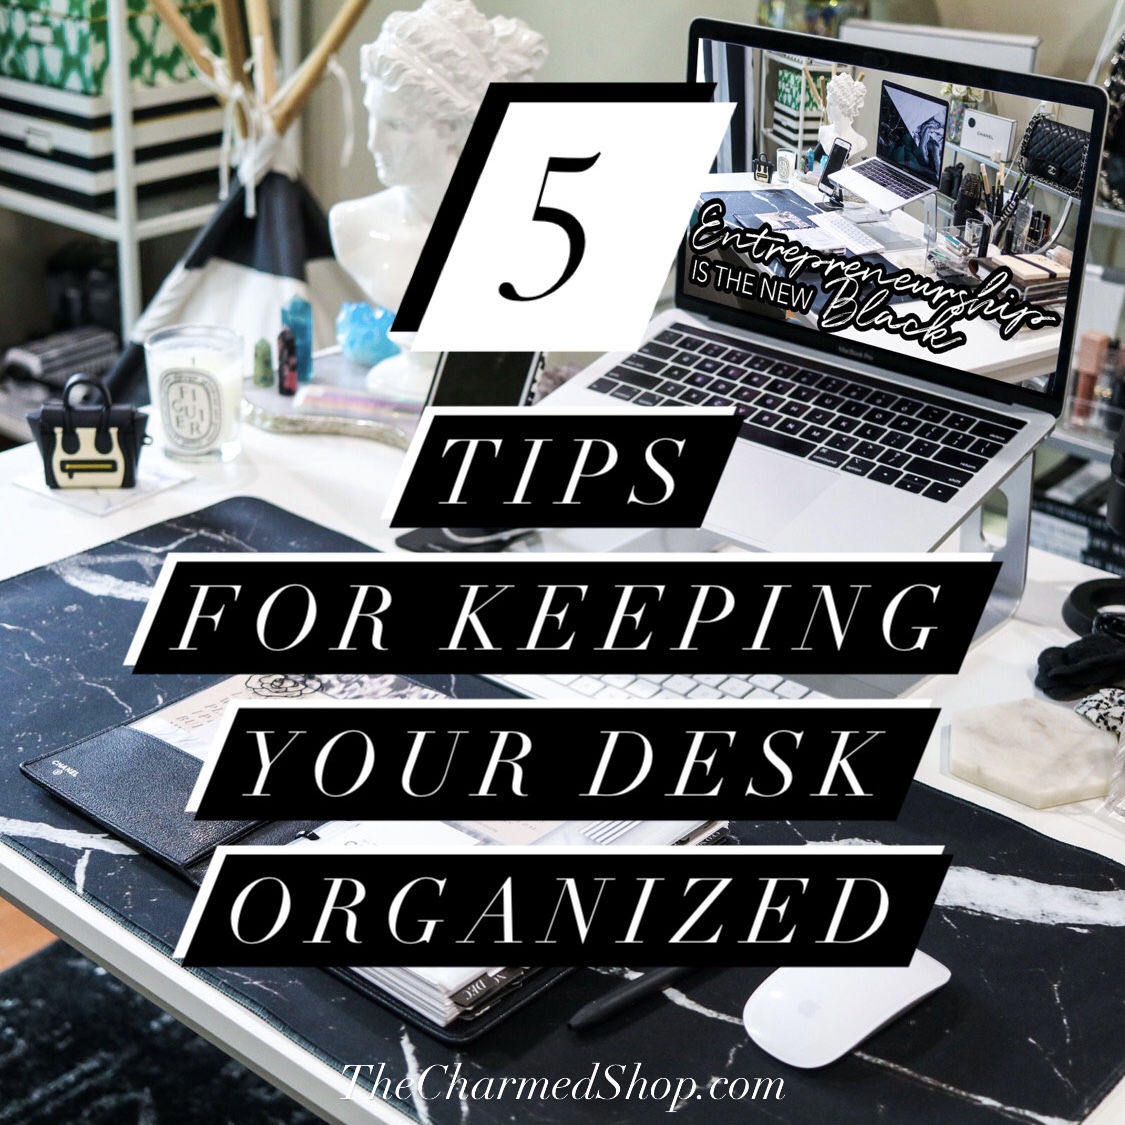 5 Tips for Keeping Your Desk Organized #OnMyDesk | LaptrinhX / News